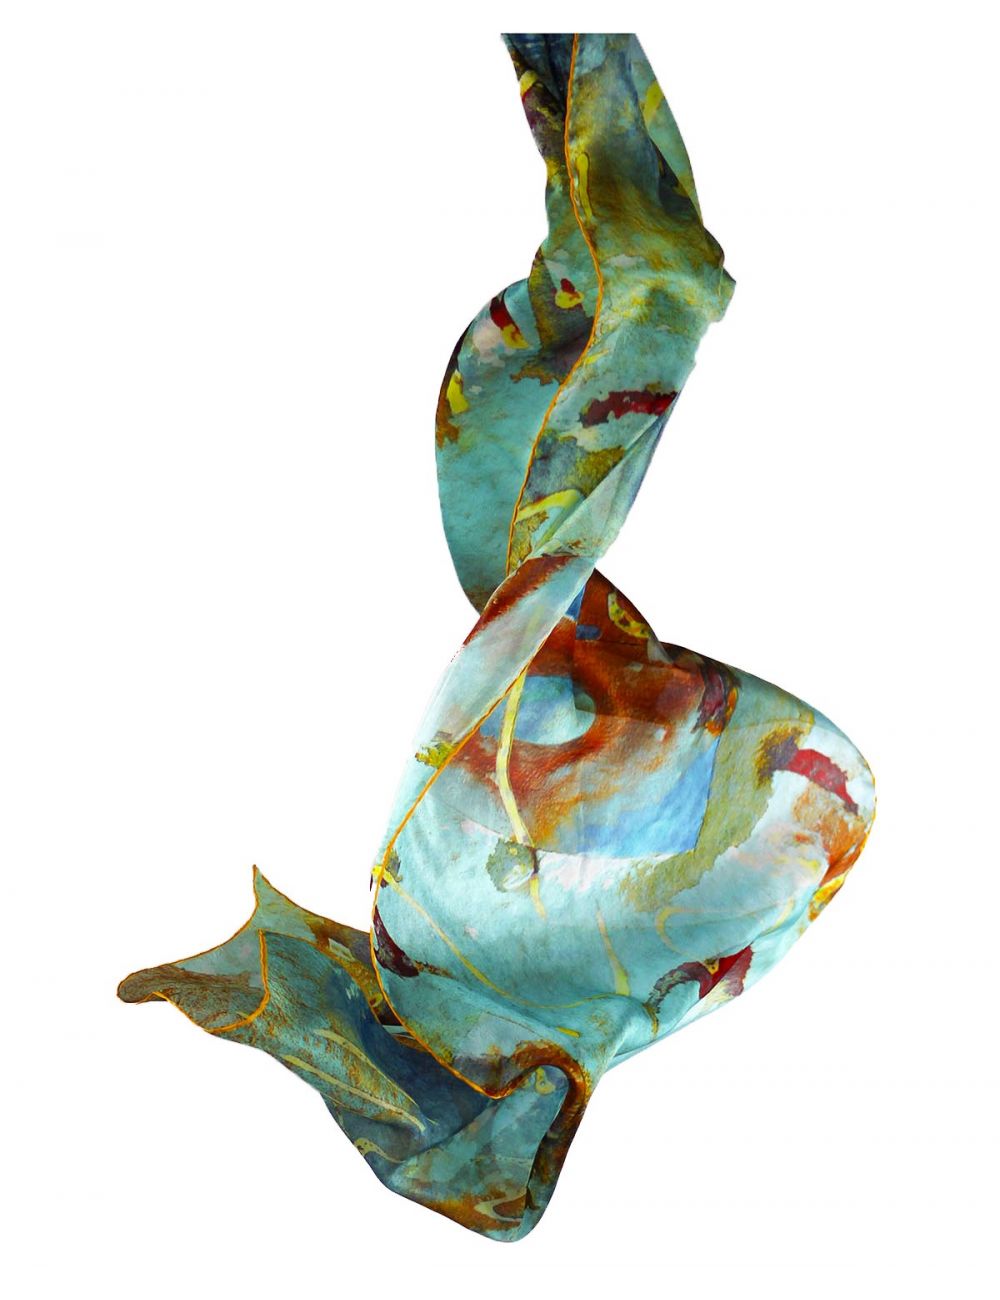 "Marine oxide", silk scarf on calm colors.